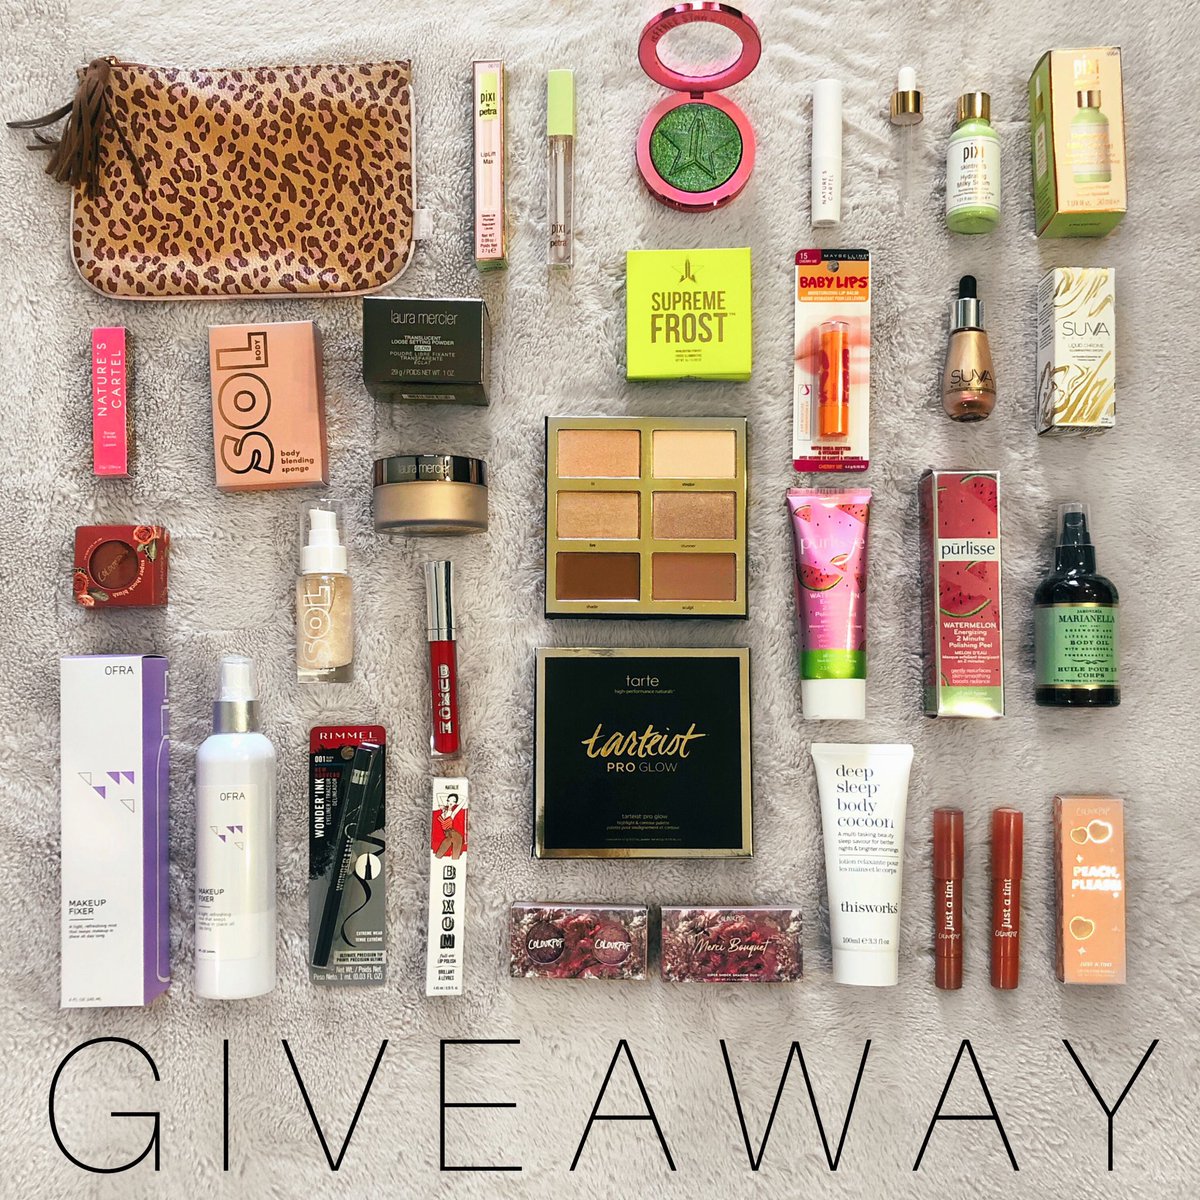 bruger Specialisere grad Melinda Fenves on Twitter: "New Instagram Giveaway! 🎉 Enter Here 👇  https://t.co/uvnJACjB14 #giveaway #makeup #makeupgiveaway #giveaways  #makeuplover #makeupaddict https://t.co/sdK9ttJnQi" / Twitter